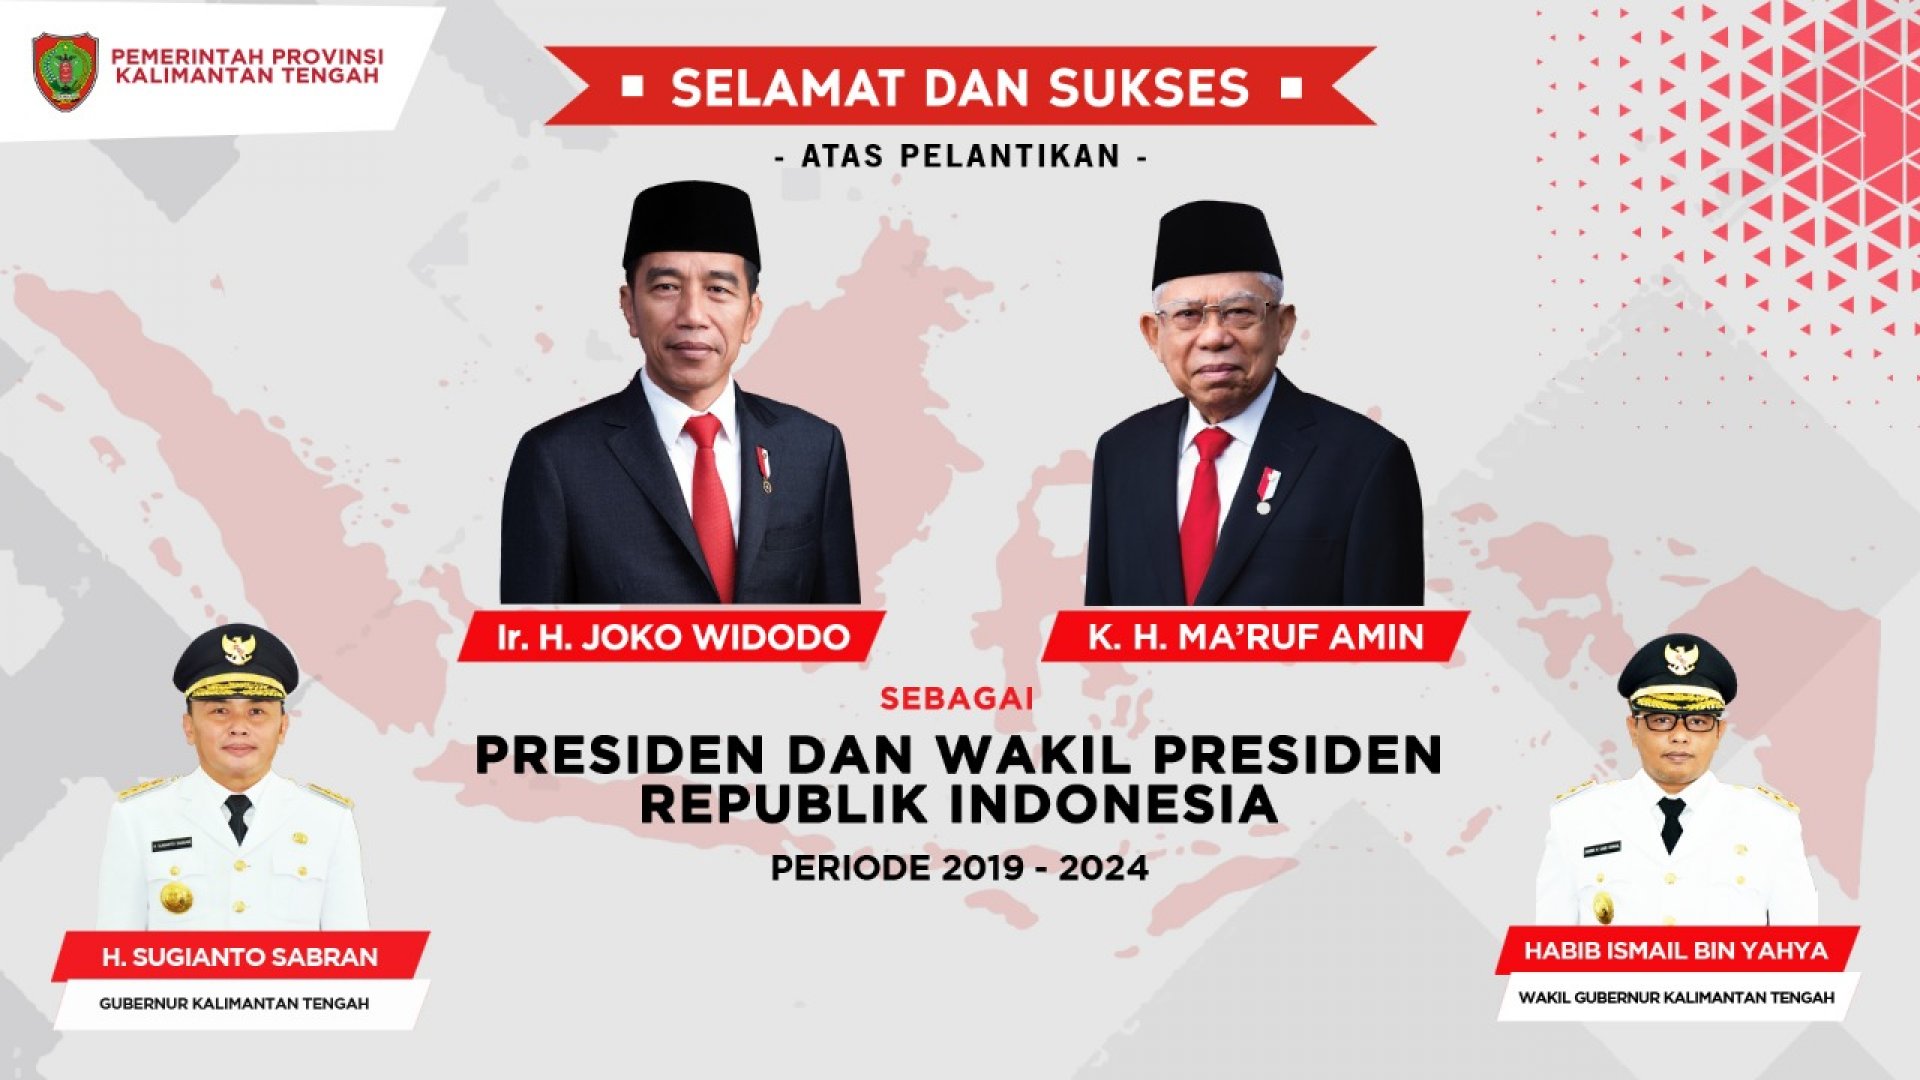 Pelantikan Presiden dan Wakil Presiden Republik Indonesia Periode 2019-2024